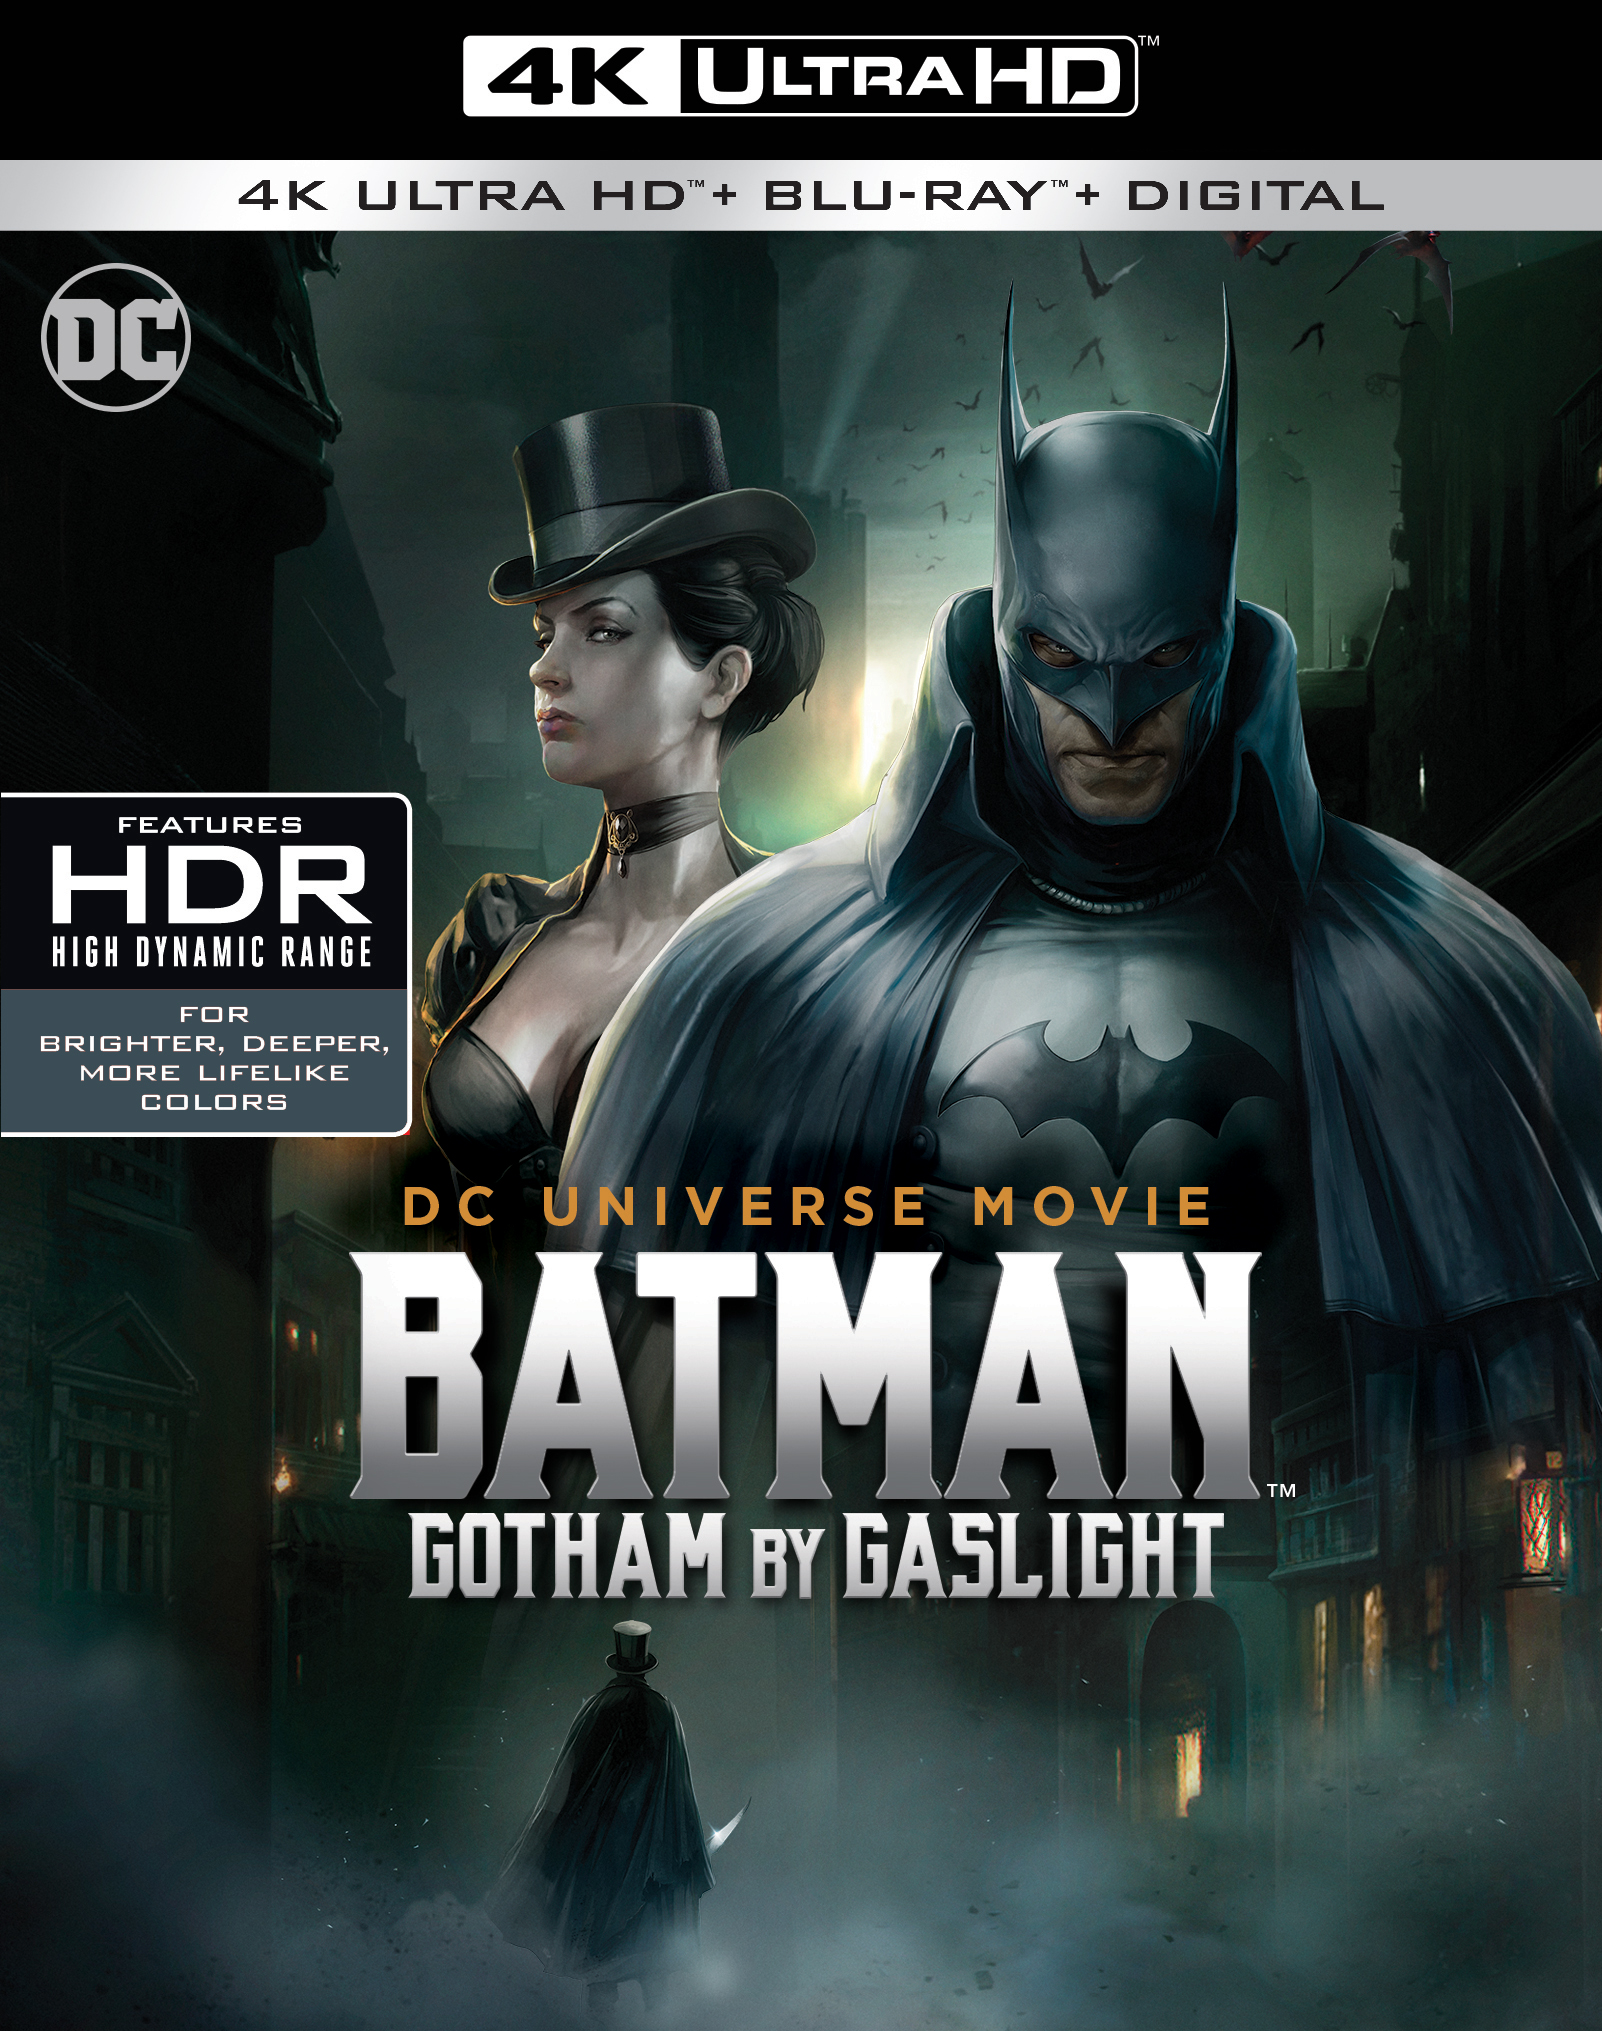 Batman Gotham by Gaslight Warner Bros release Blu-ray DVD 4K